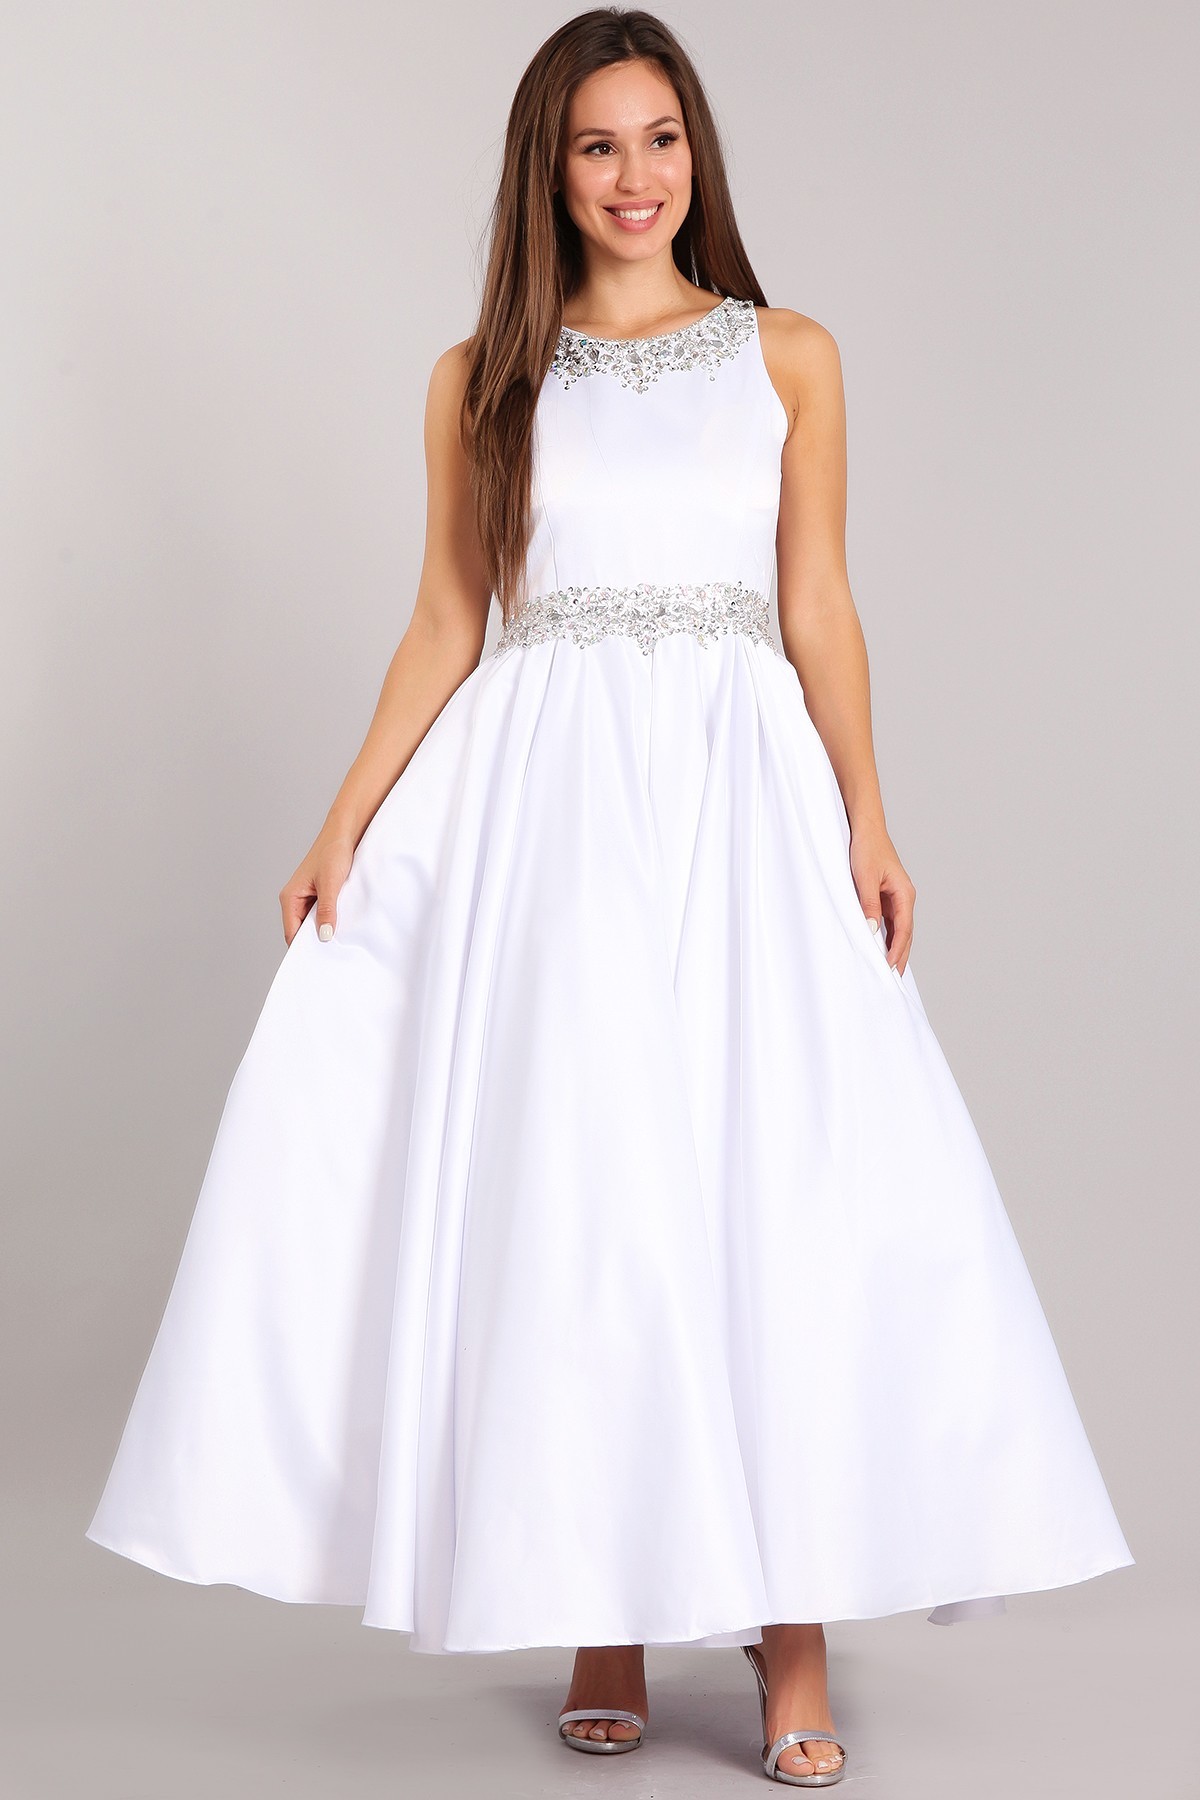 white sleeveless dress